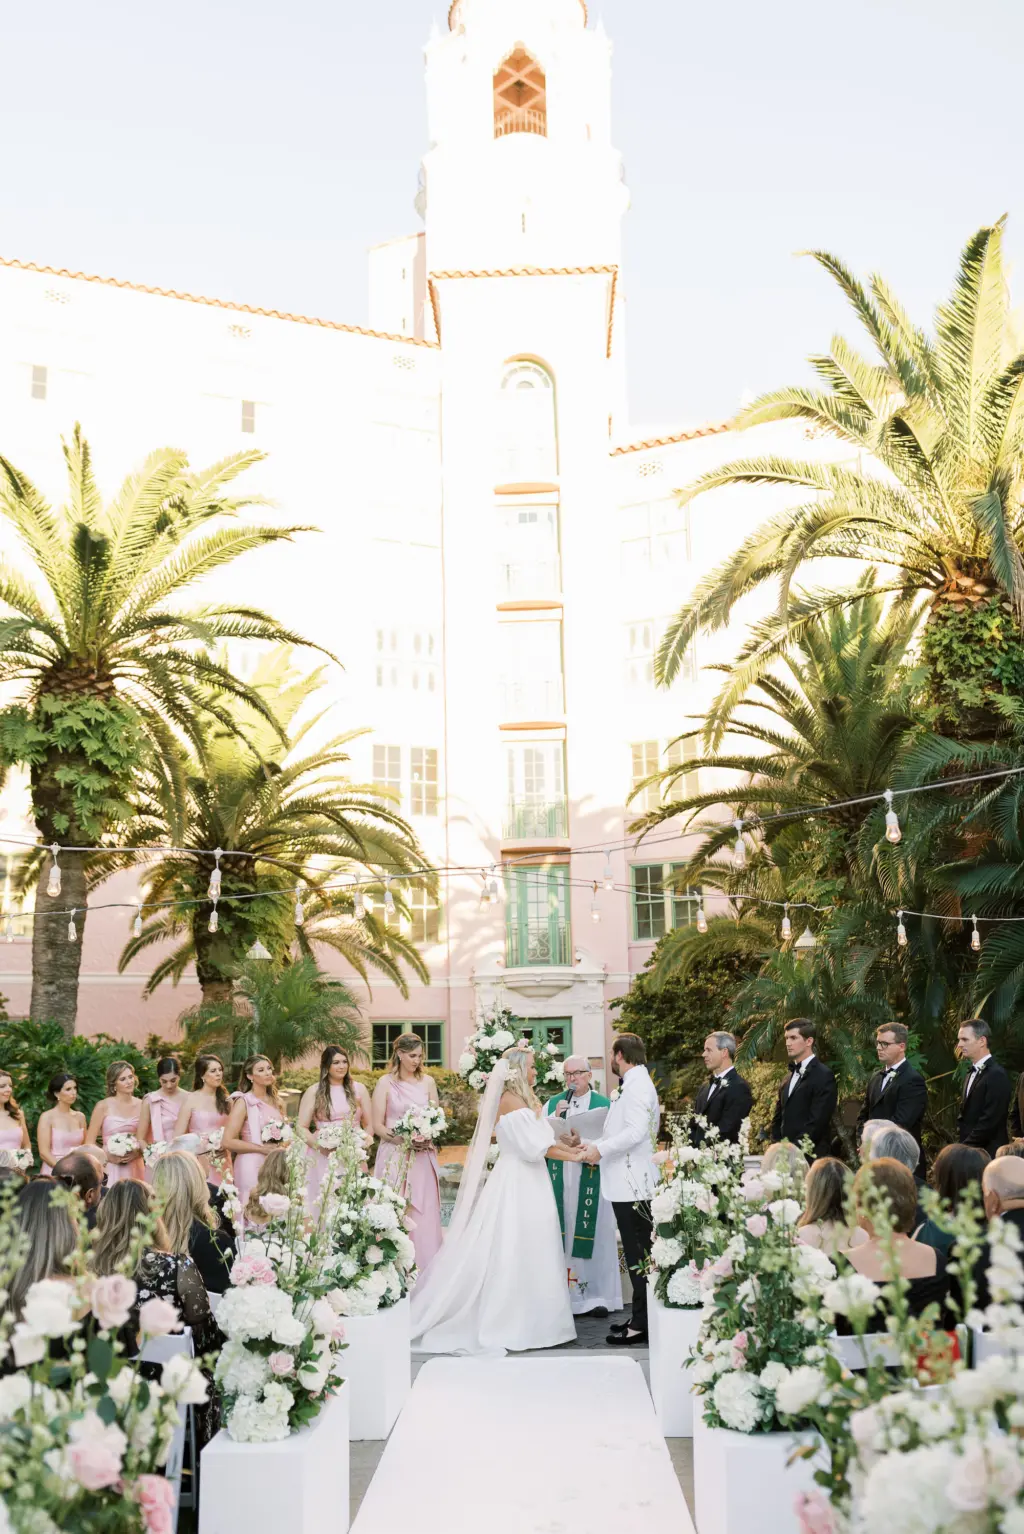 Bride and Groom Vow Exchange | Outdoor Pink Religious Wedding Ceremony Inspiration | Tampa Bay Florist Bruce Wayne Florals | St Petersburg Planner Parties A La Carte